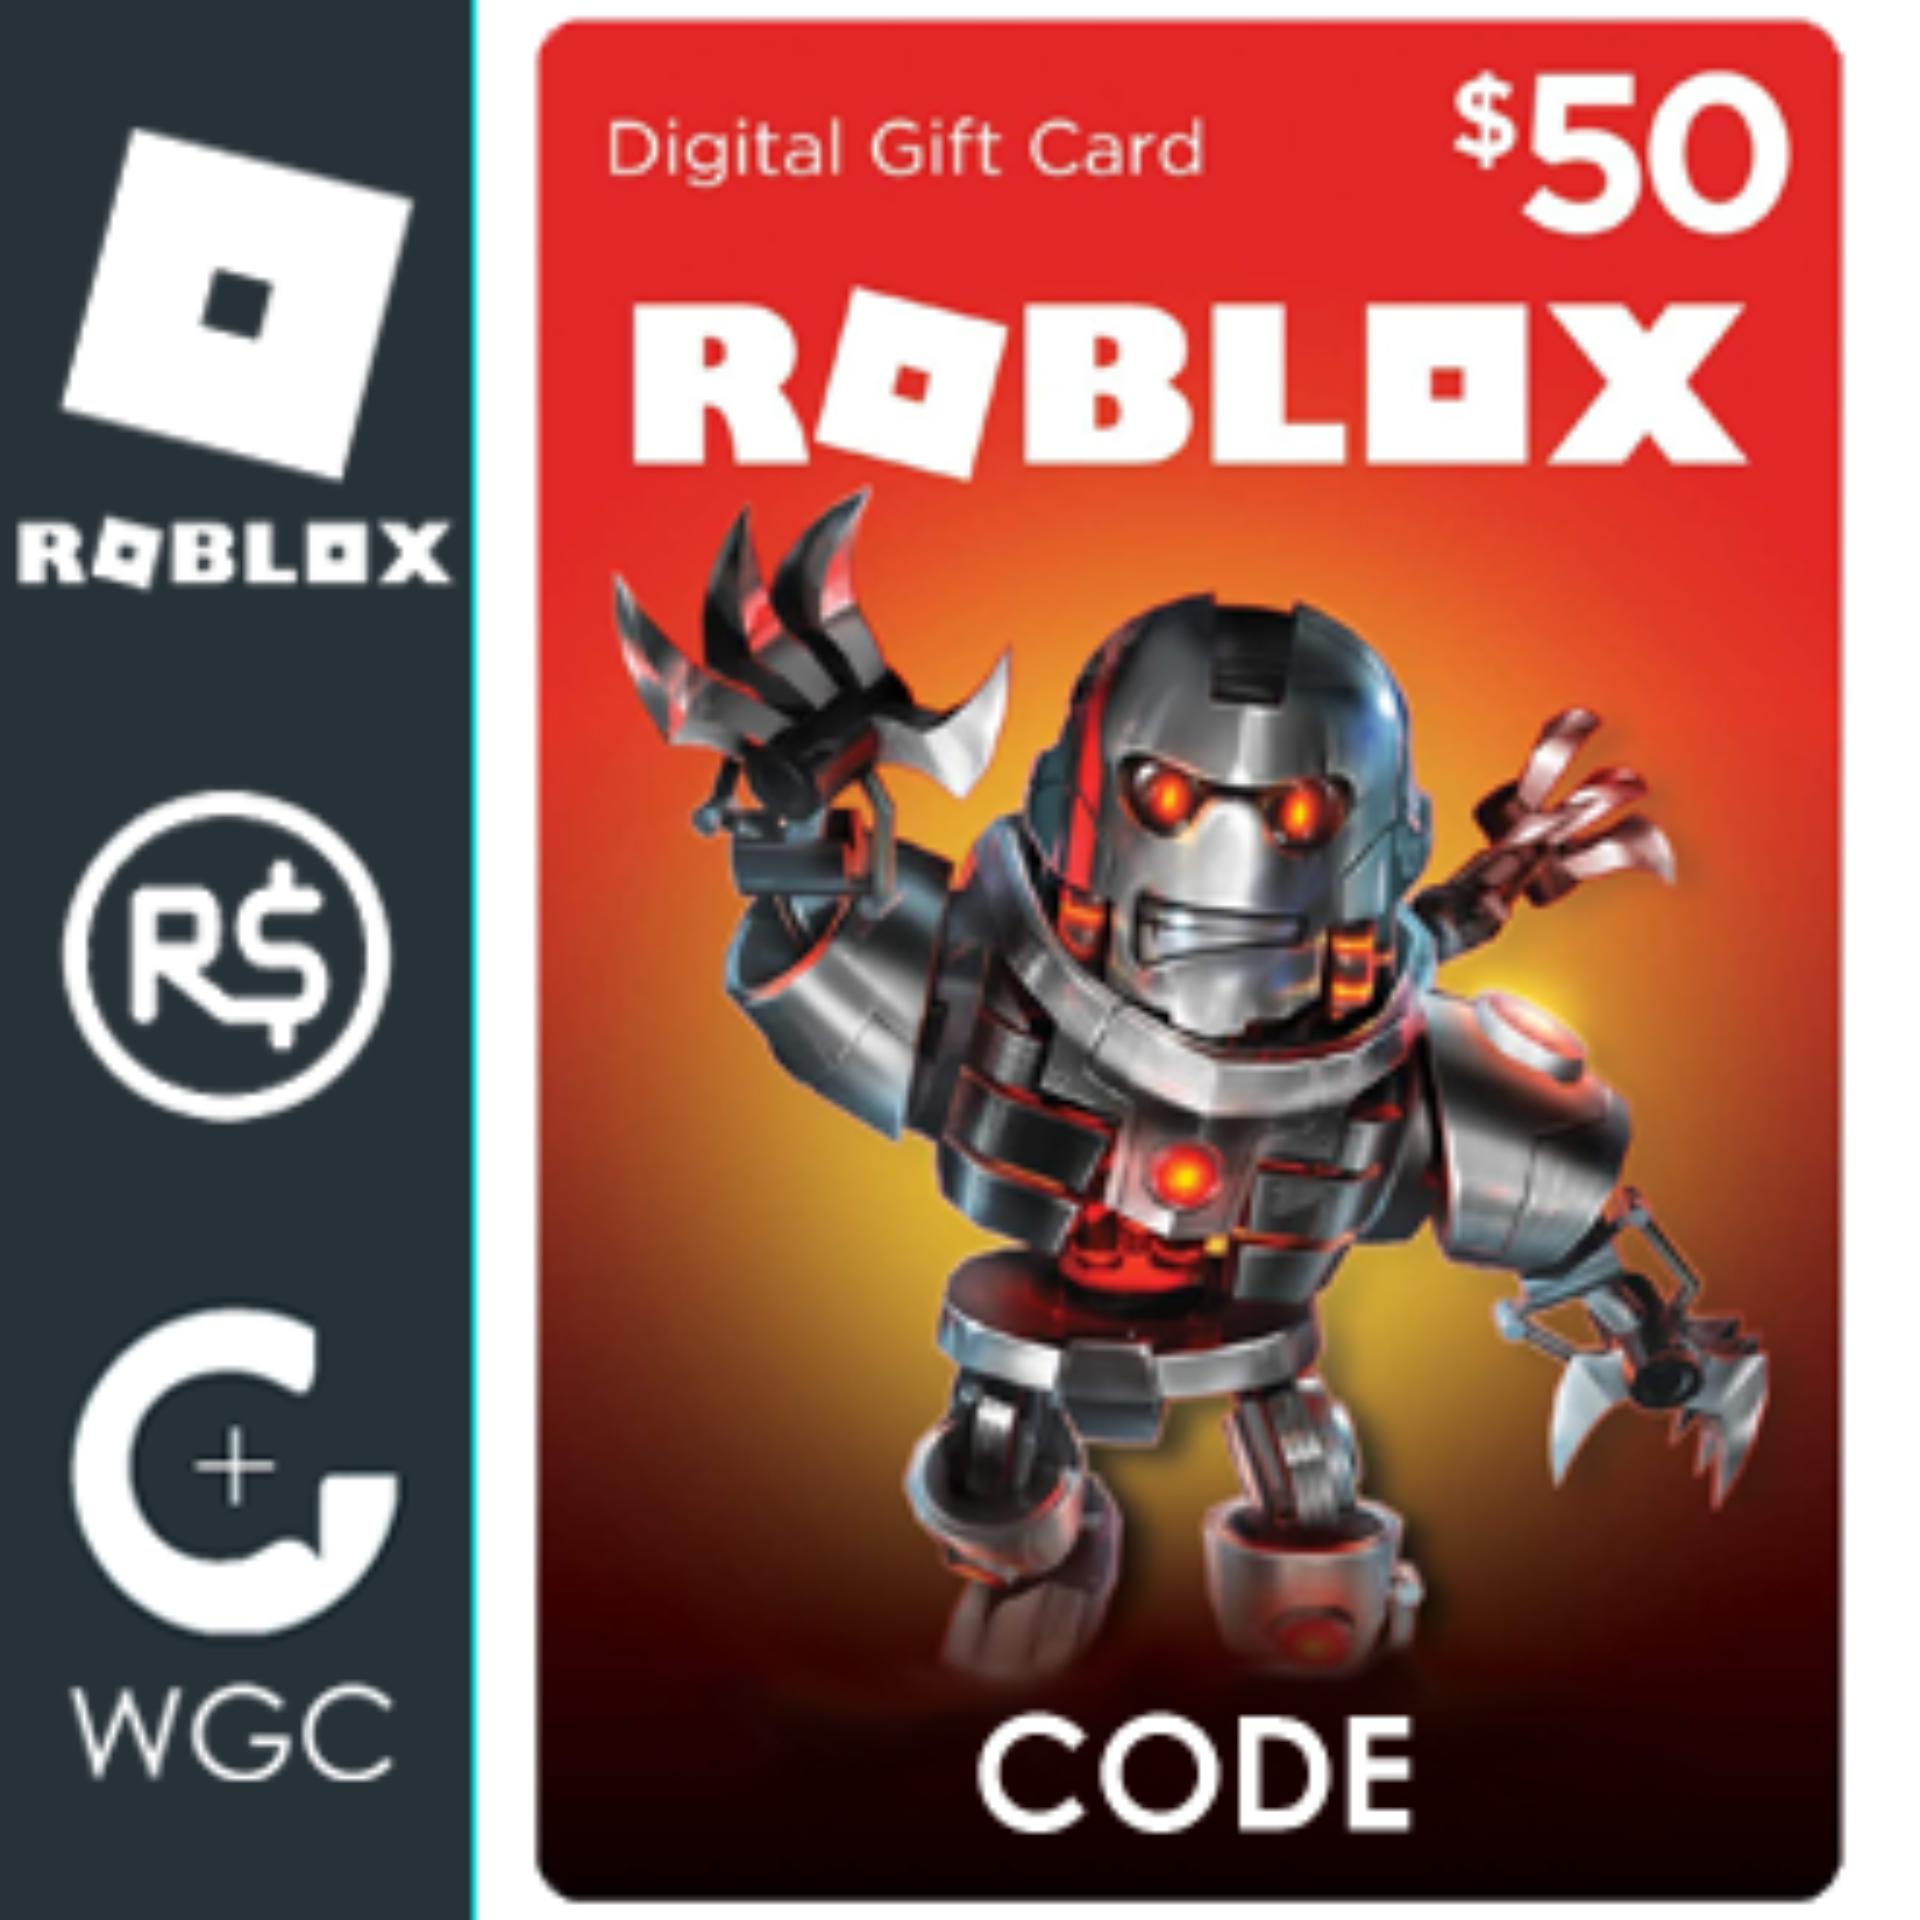 50 Roblox Gift Card 4 950 Robux Premium Lazada Ph